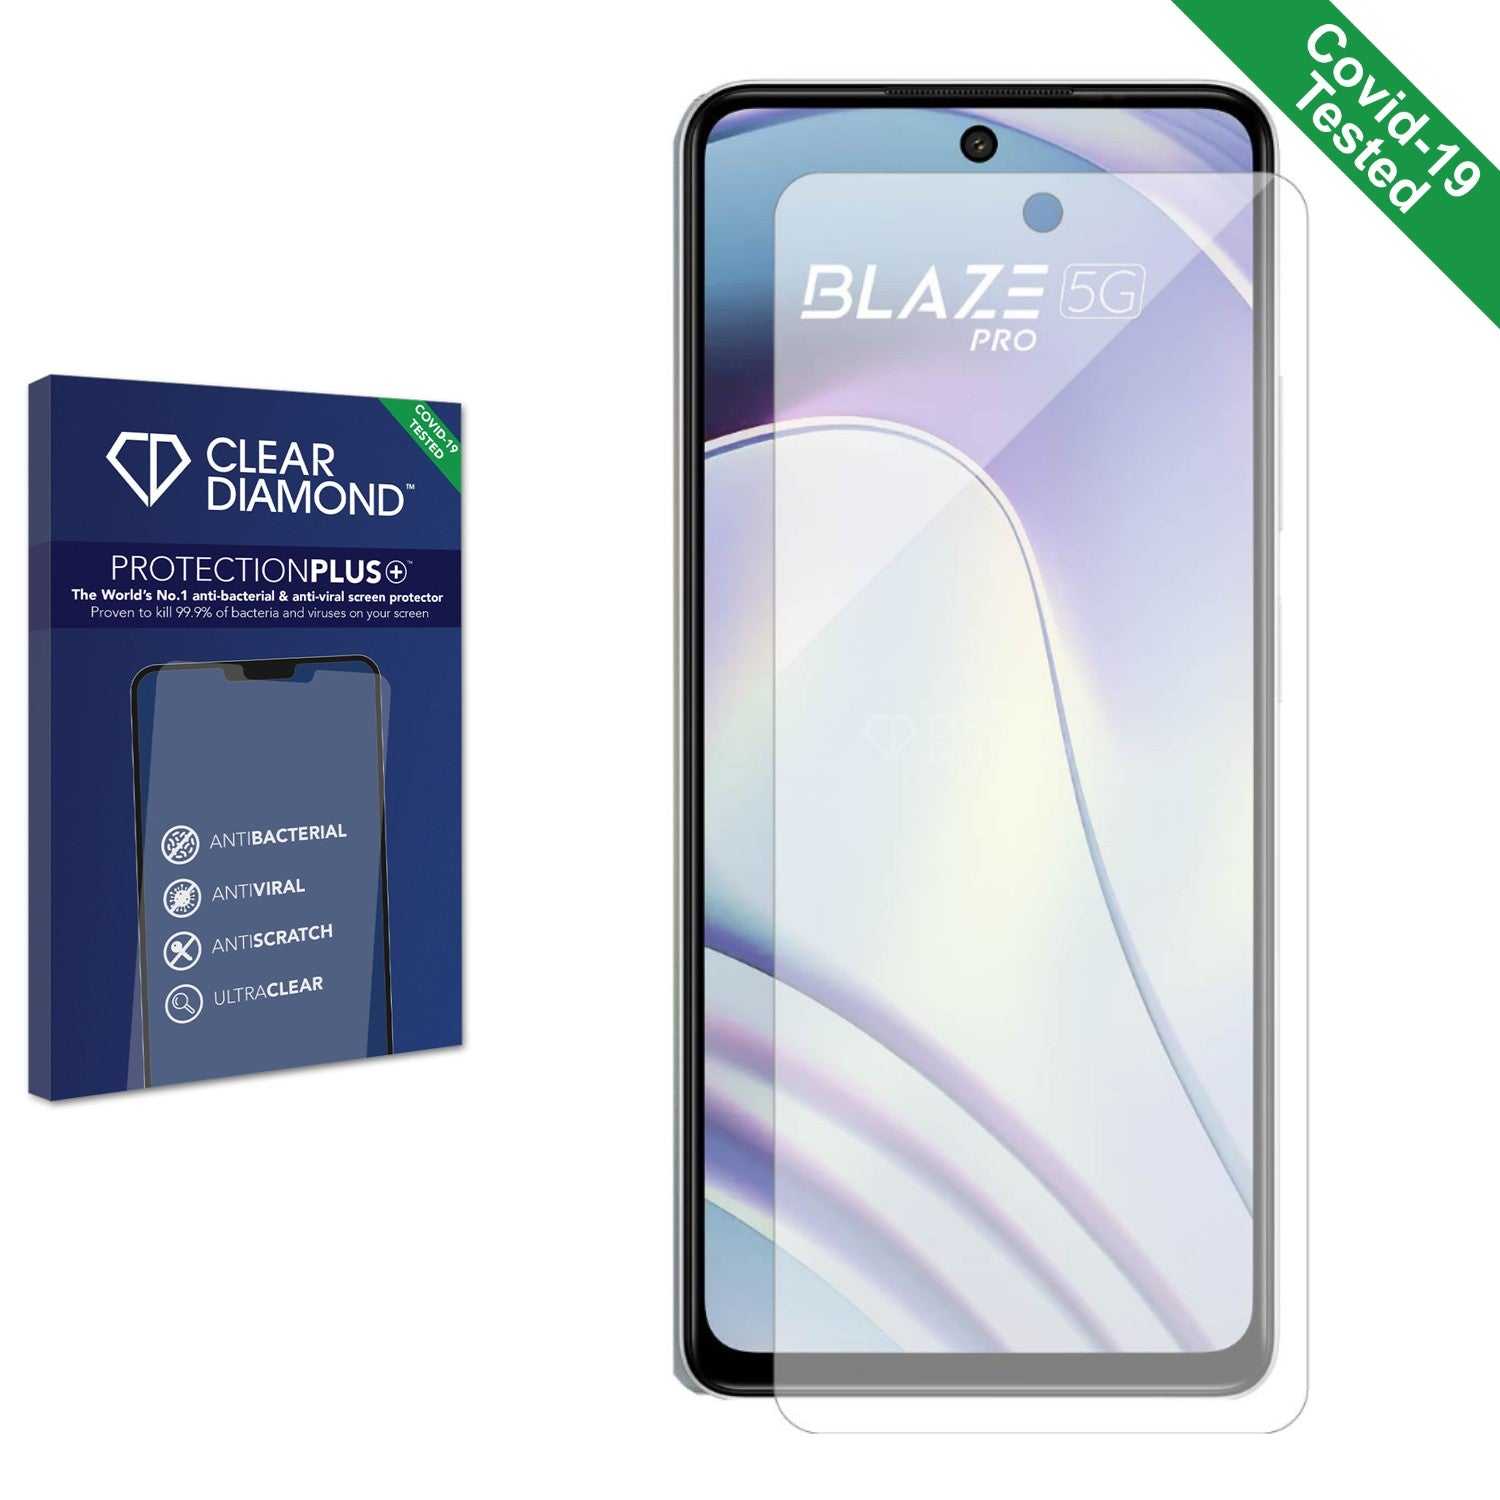 ScreenShield, Clear Diamond Anti-viral Screen Protector for Lava Blaze Pro 5G